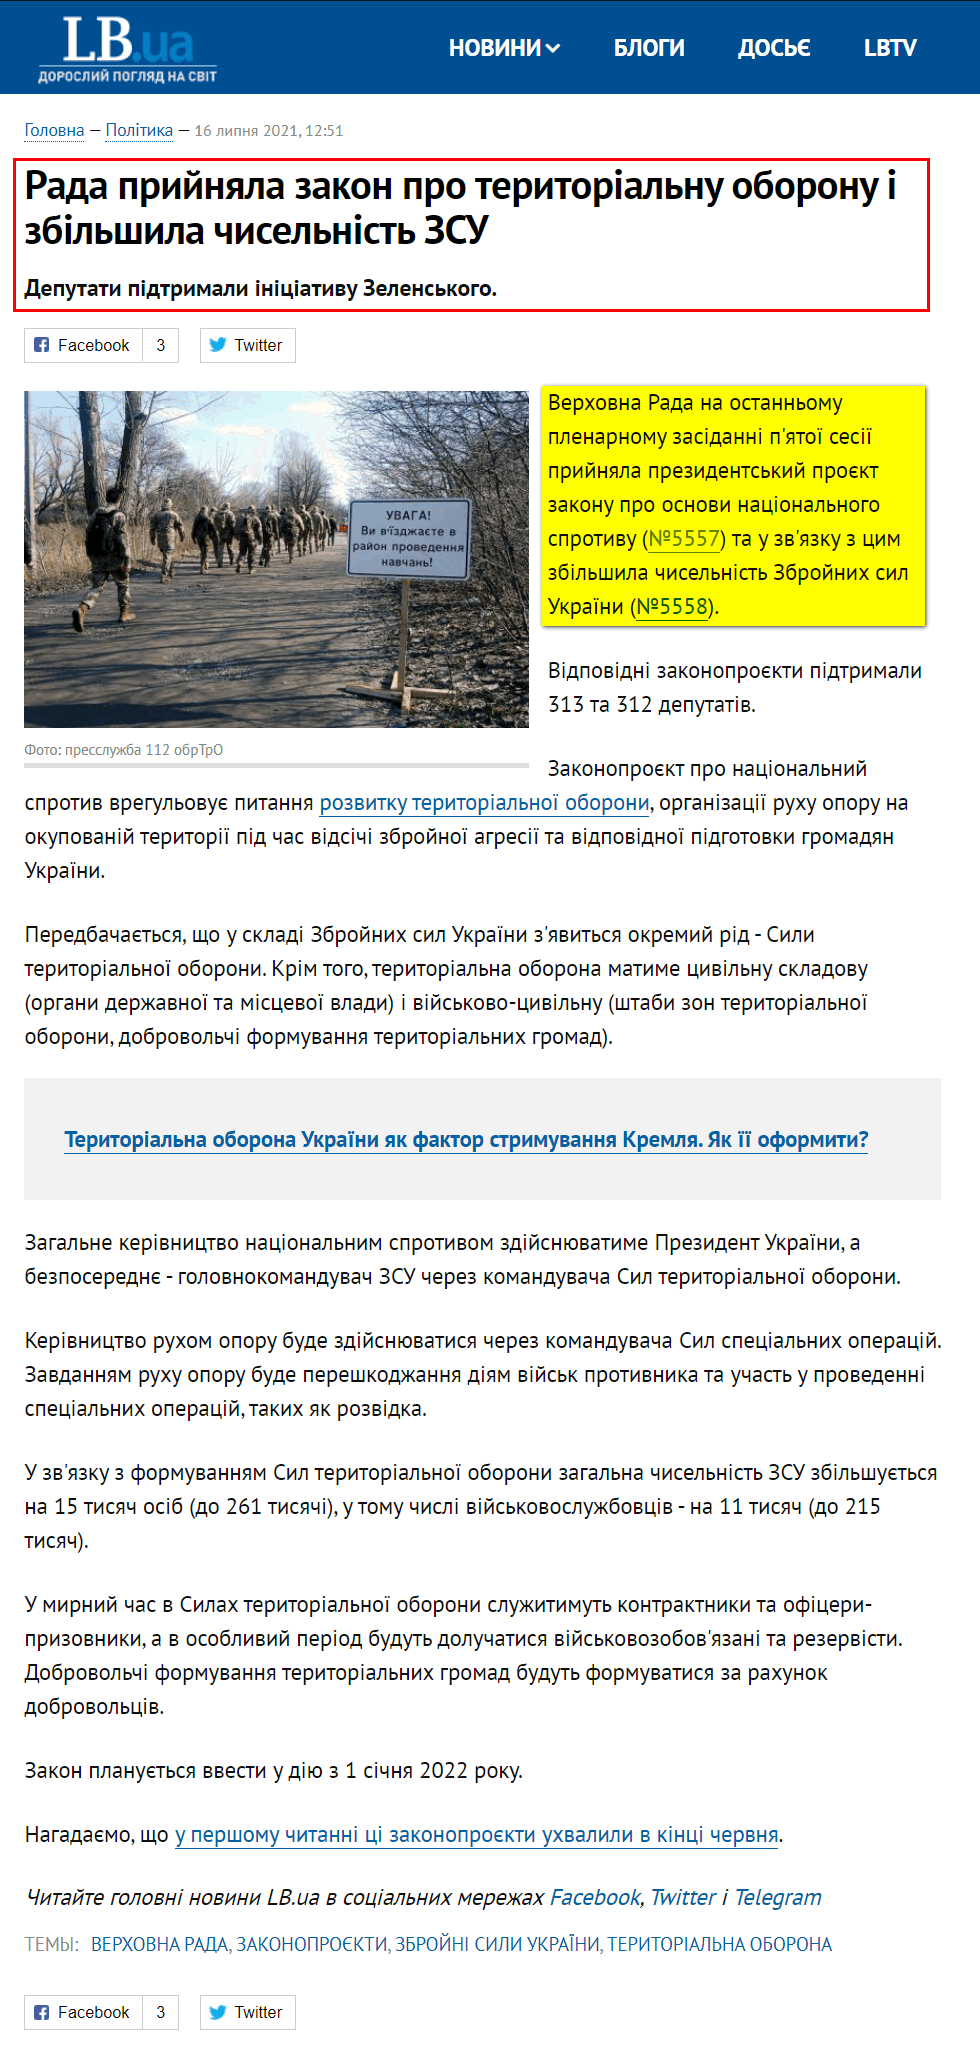 https://lb.ua/news/2021/07/16/489535_rada_priynyala_zakon_pro.html